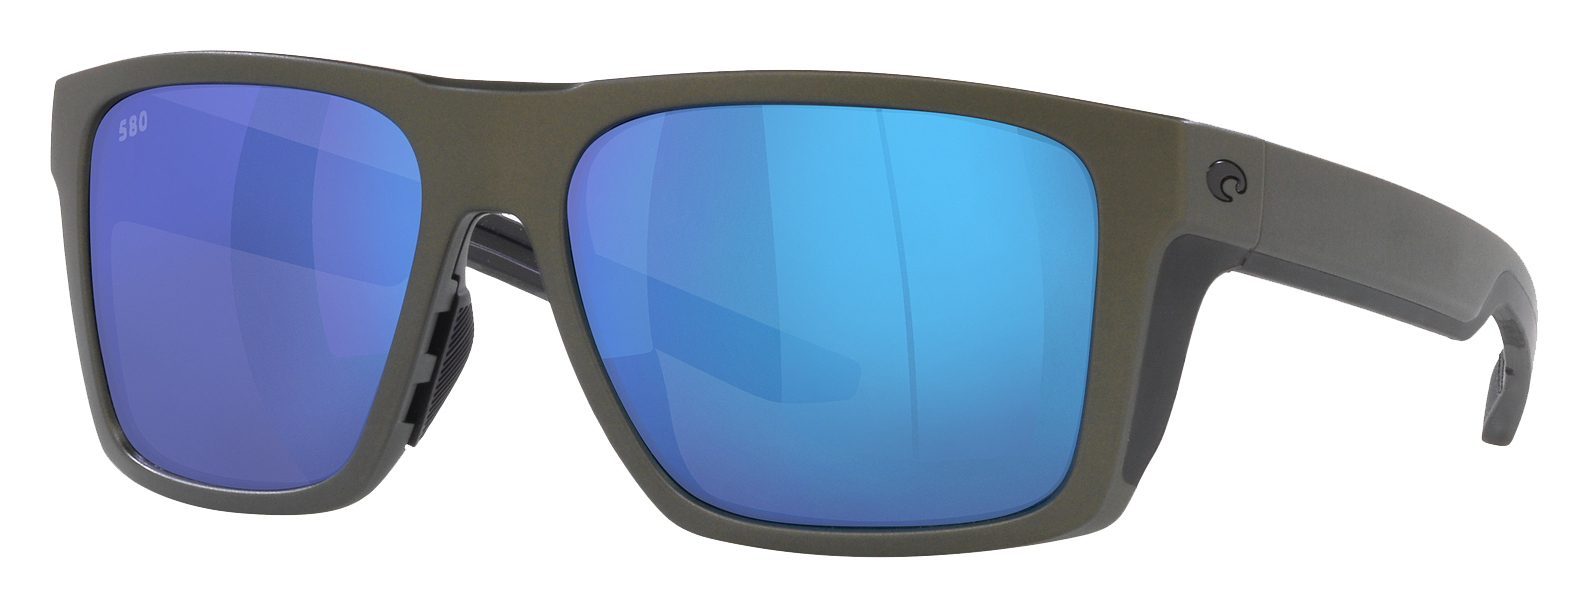 Costa Del Mar Lido 580G Glass Polarized Sunglasses - Steel Gray Metallic/Blue Mirror - Large